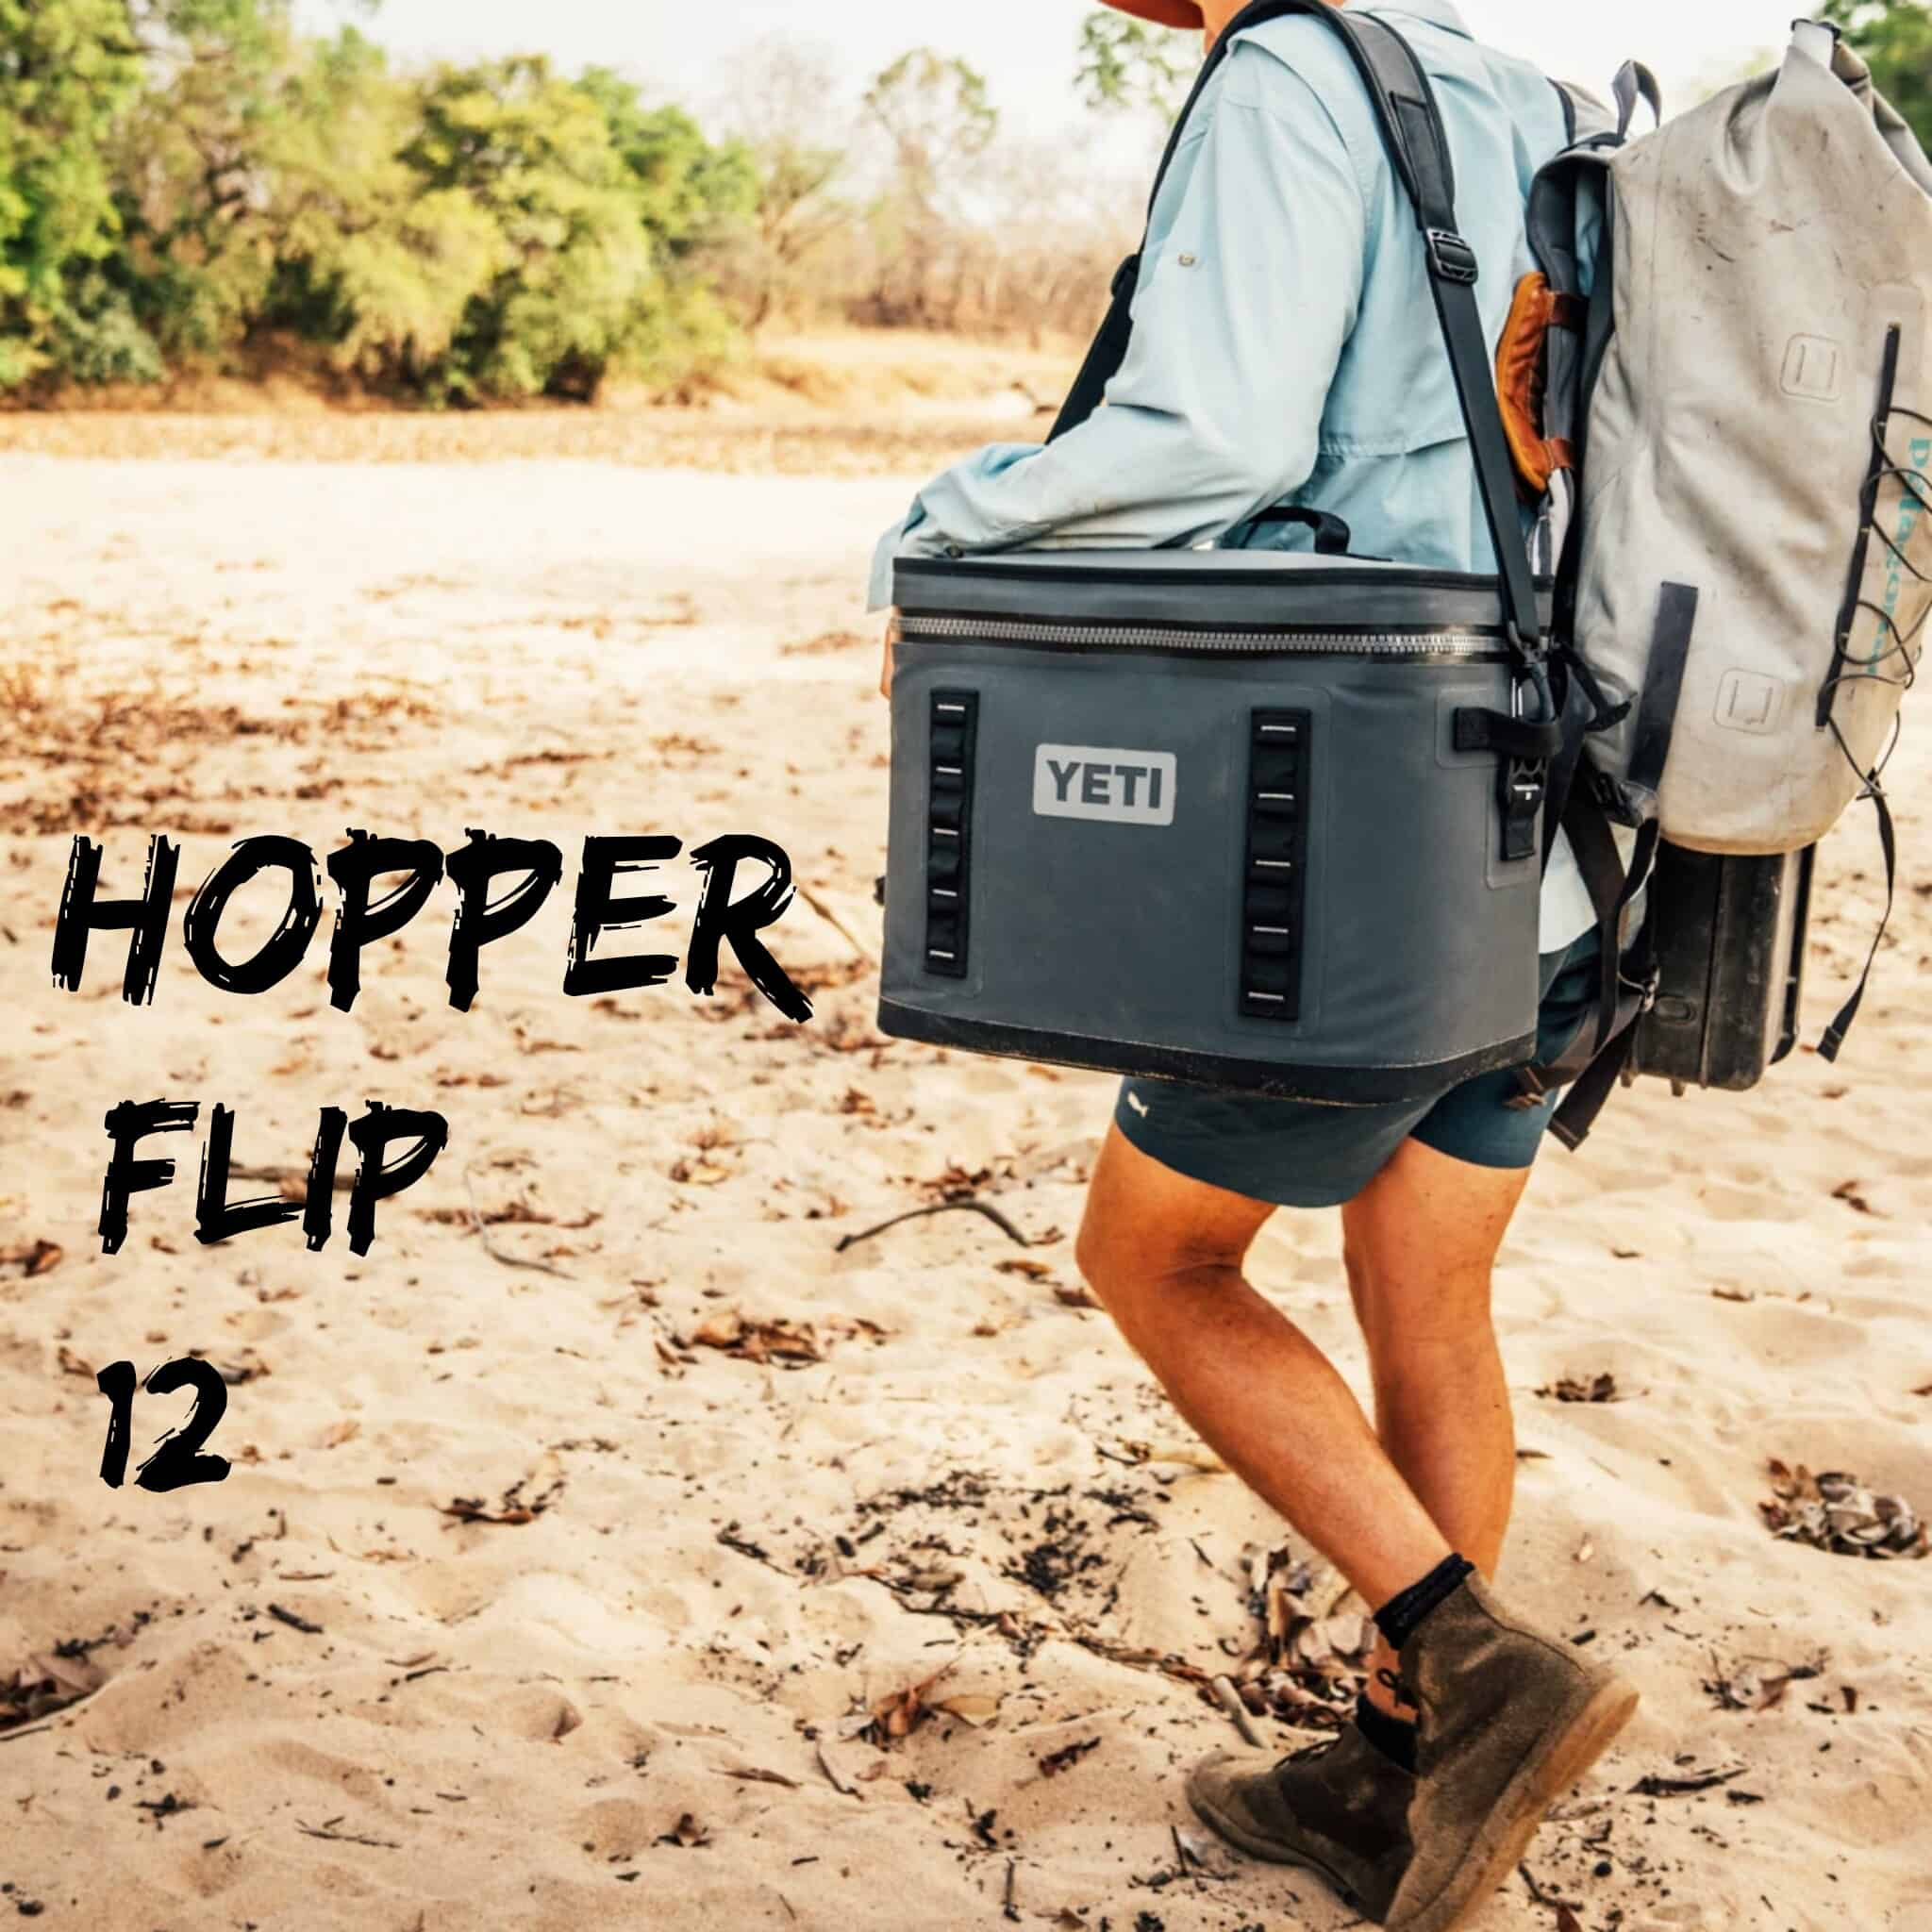 Hopper Flip 12 by YETI